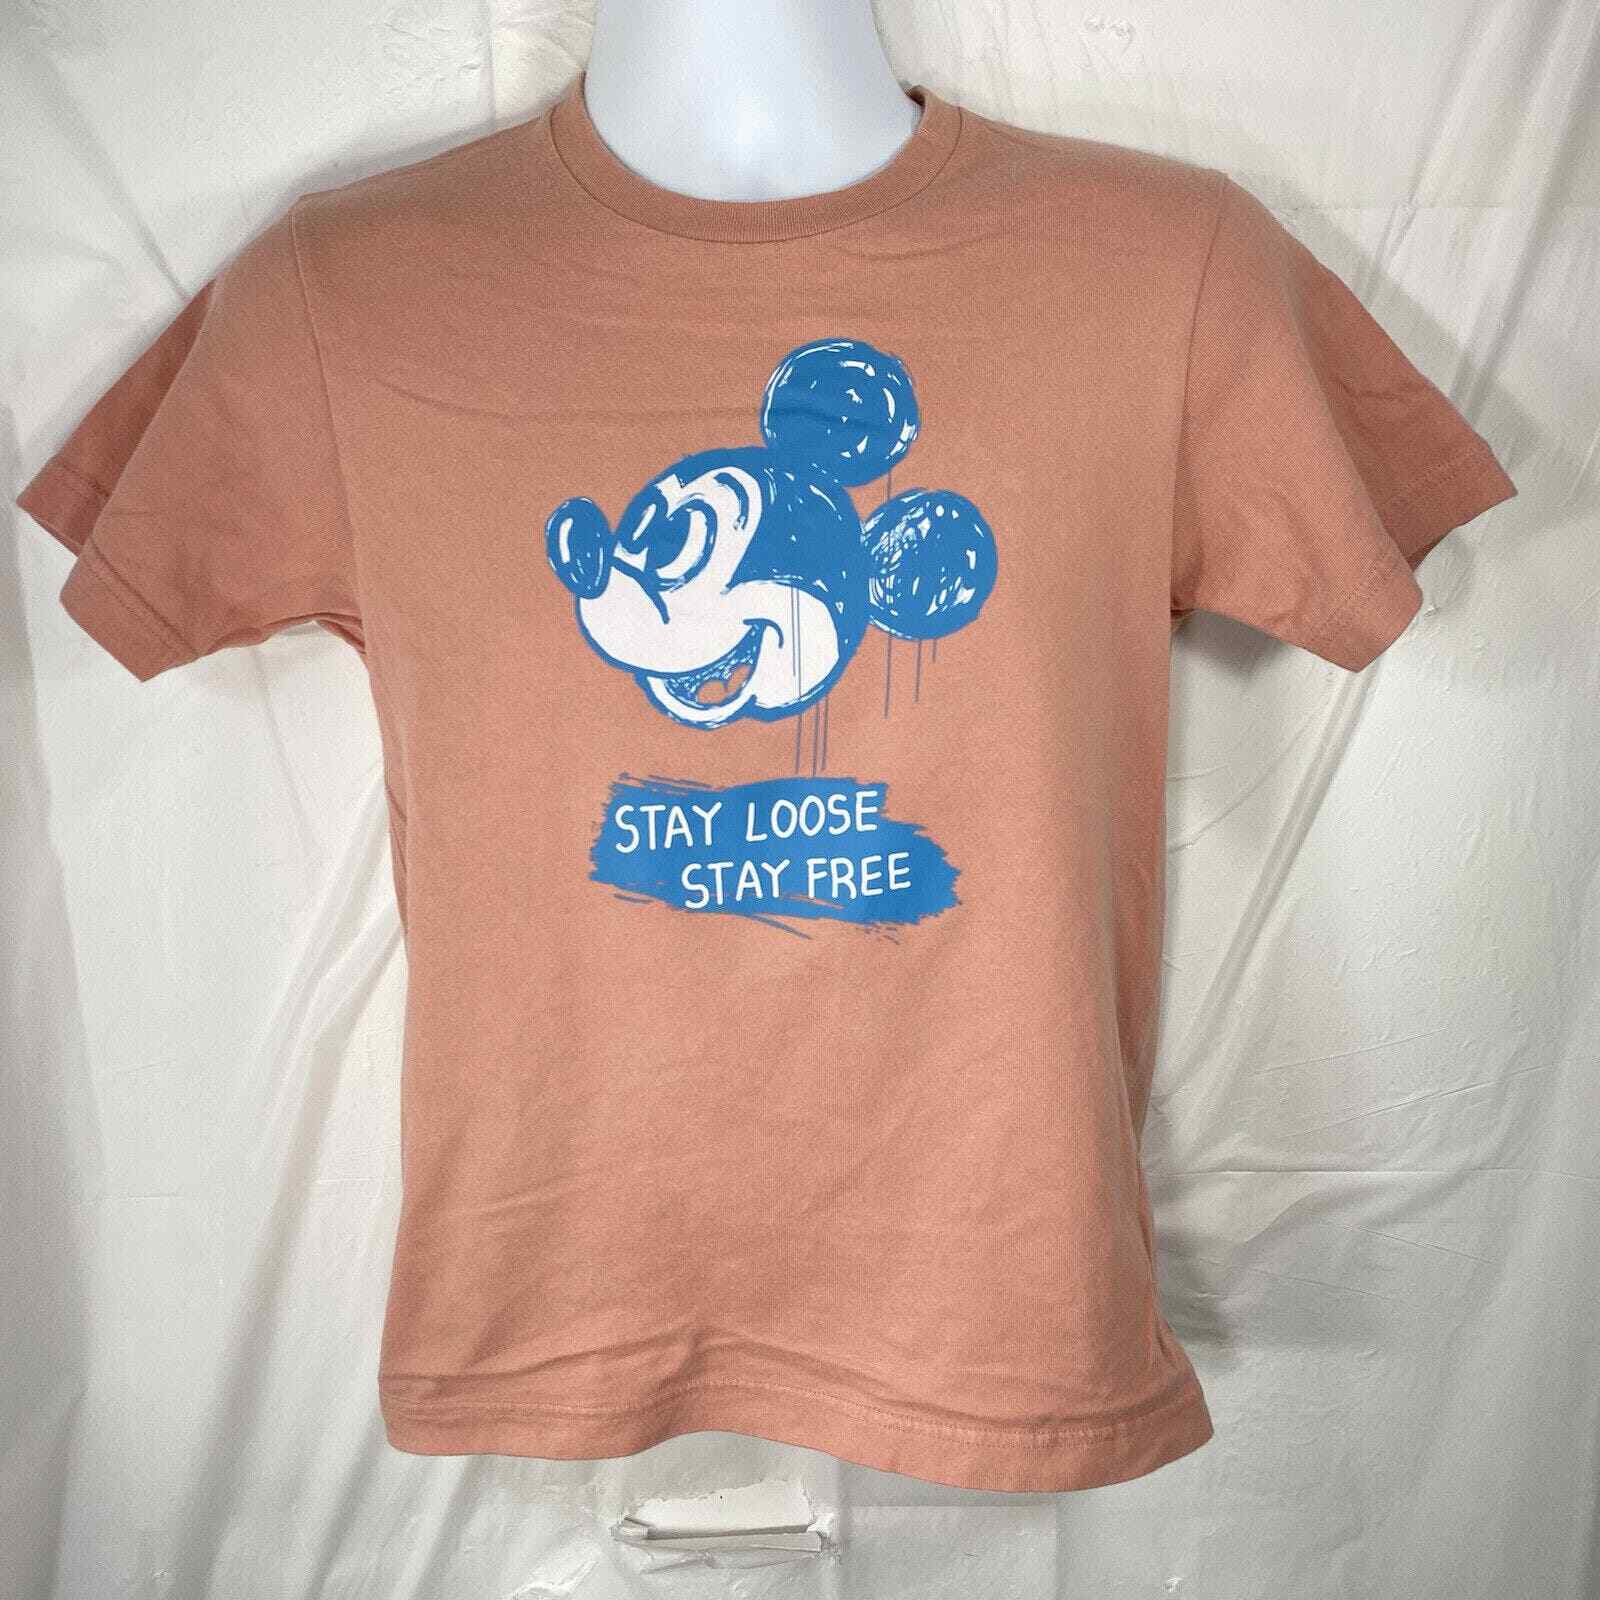 Uniqlo x Jeremyville Disney Men's XS Short Sleeve Mickey Mouse Graphic T Shirt